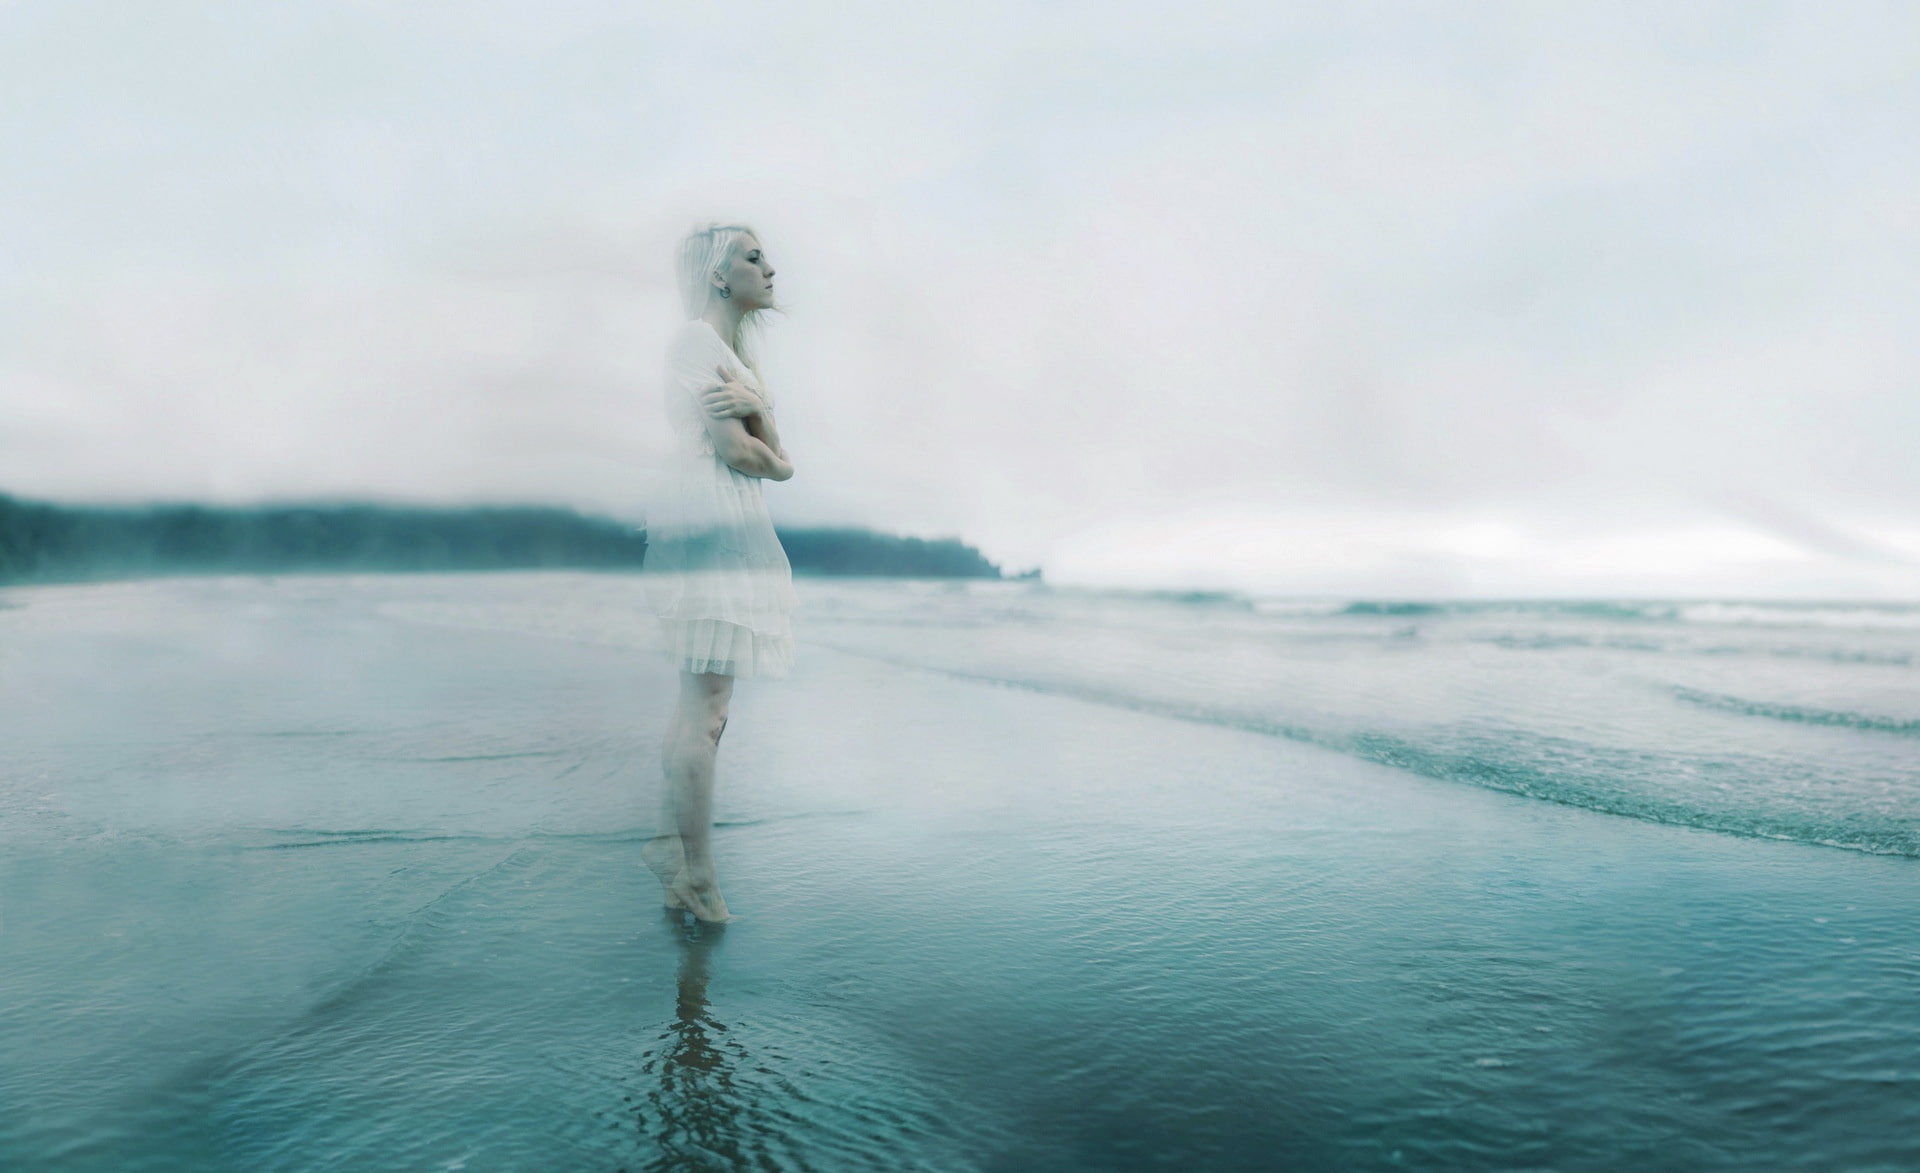 Ghost, women's white dress, Aero, Creative, water, sea, beauty in nature